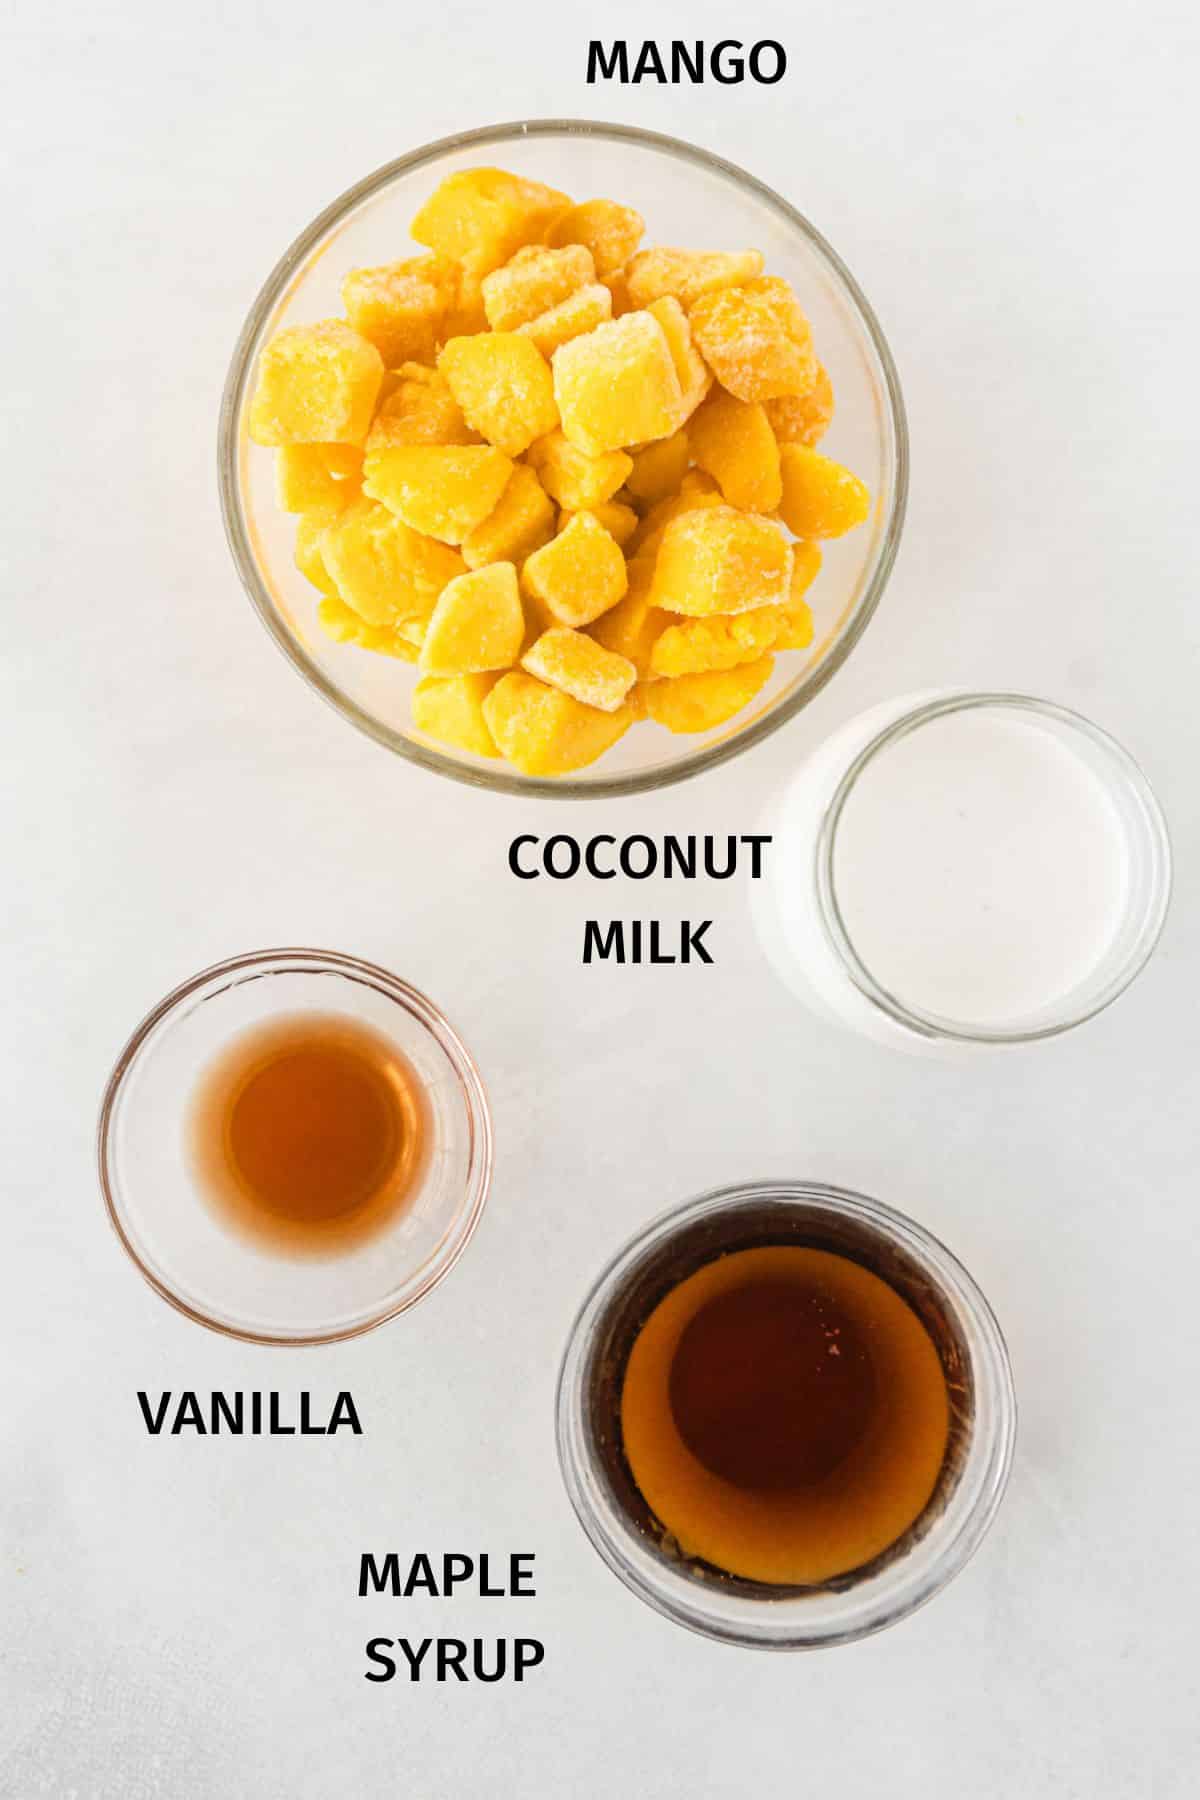 ingredients for making mango ice cream.